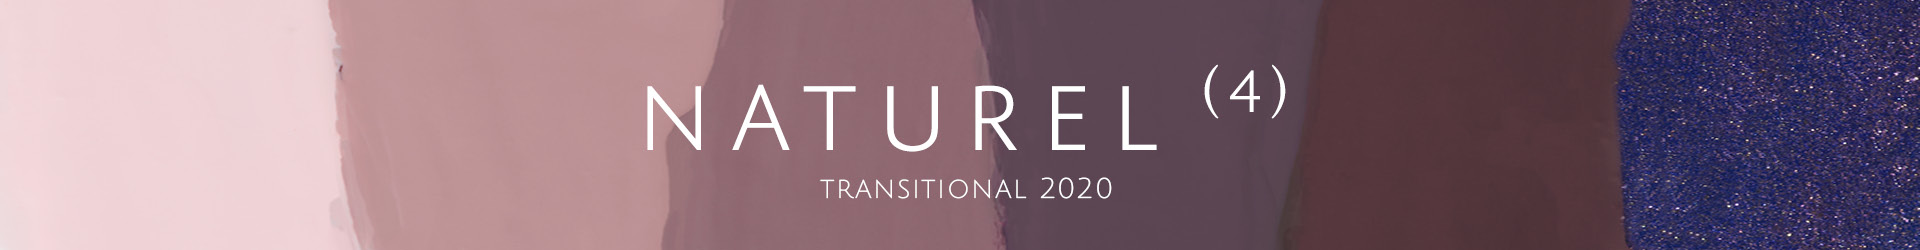 Zoya Transitional 2020 - Naturel 4 Collection